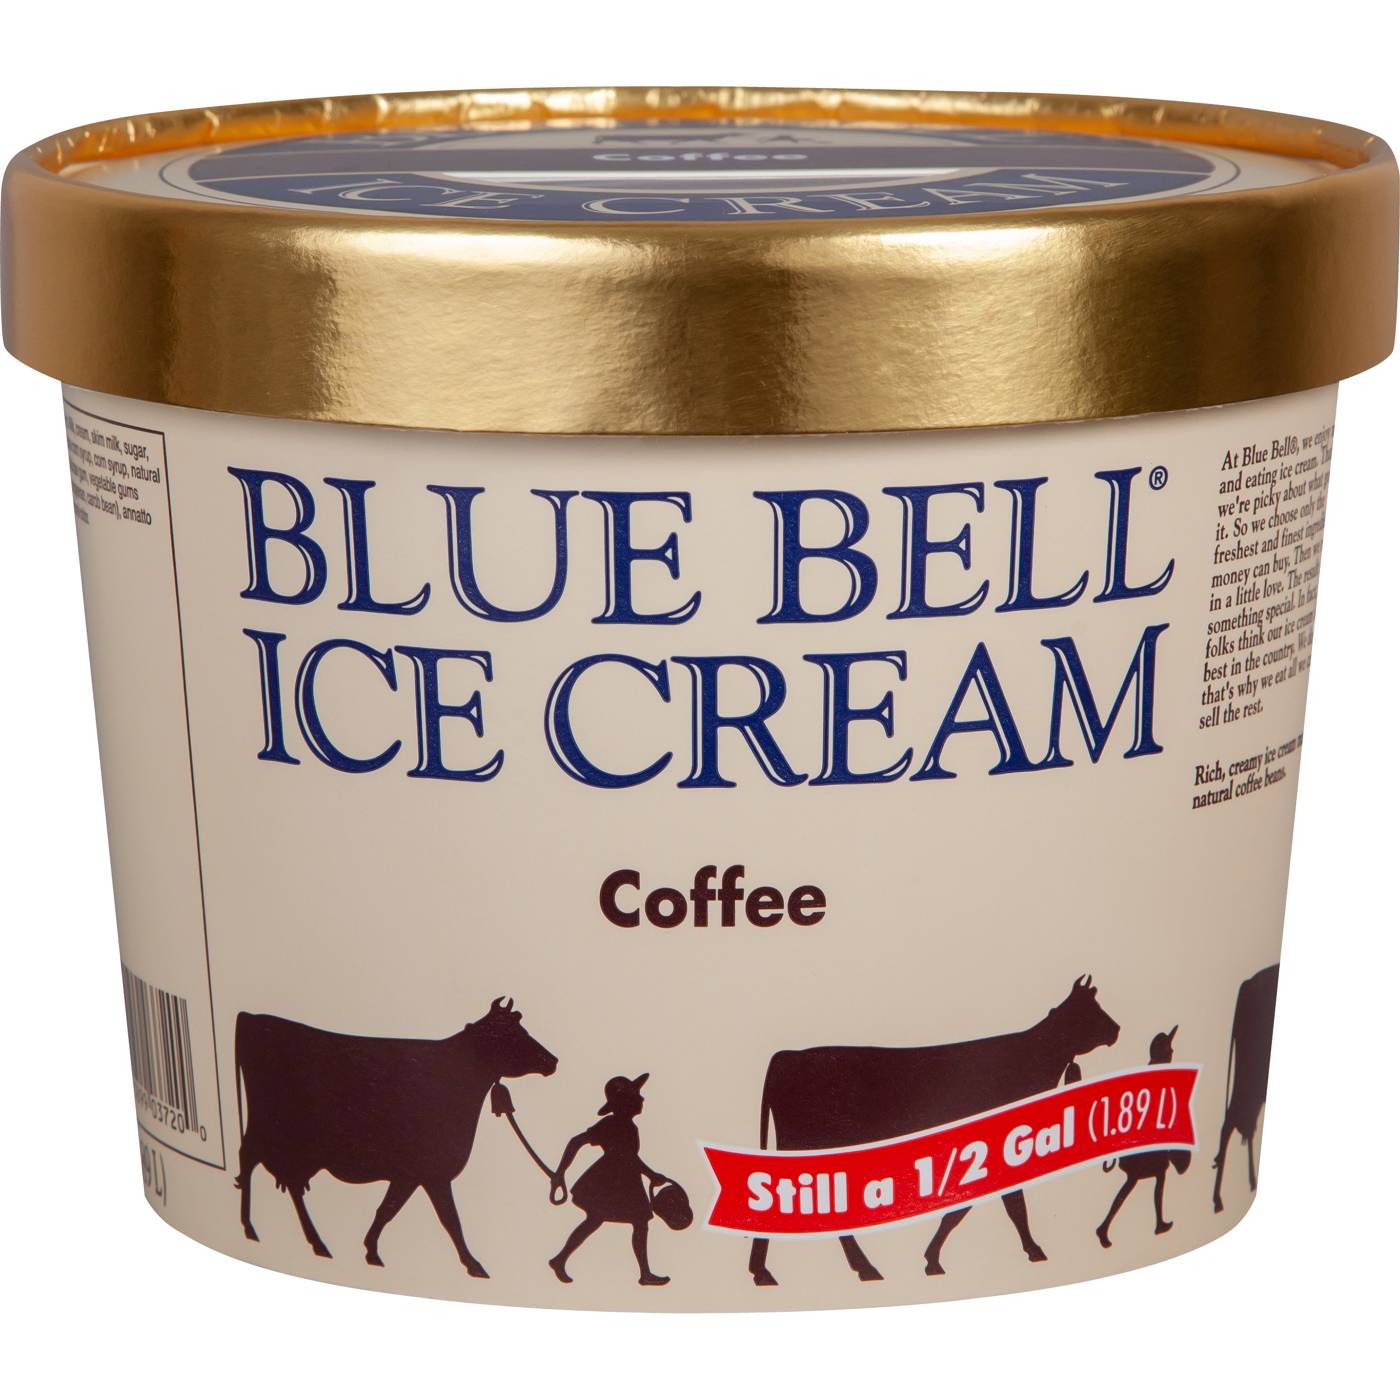 Blue Bell Coffee Ice Cream; image 1 of 2